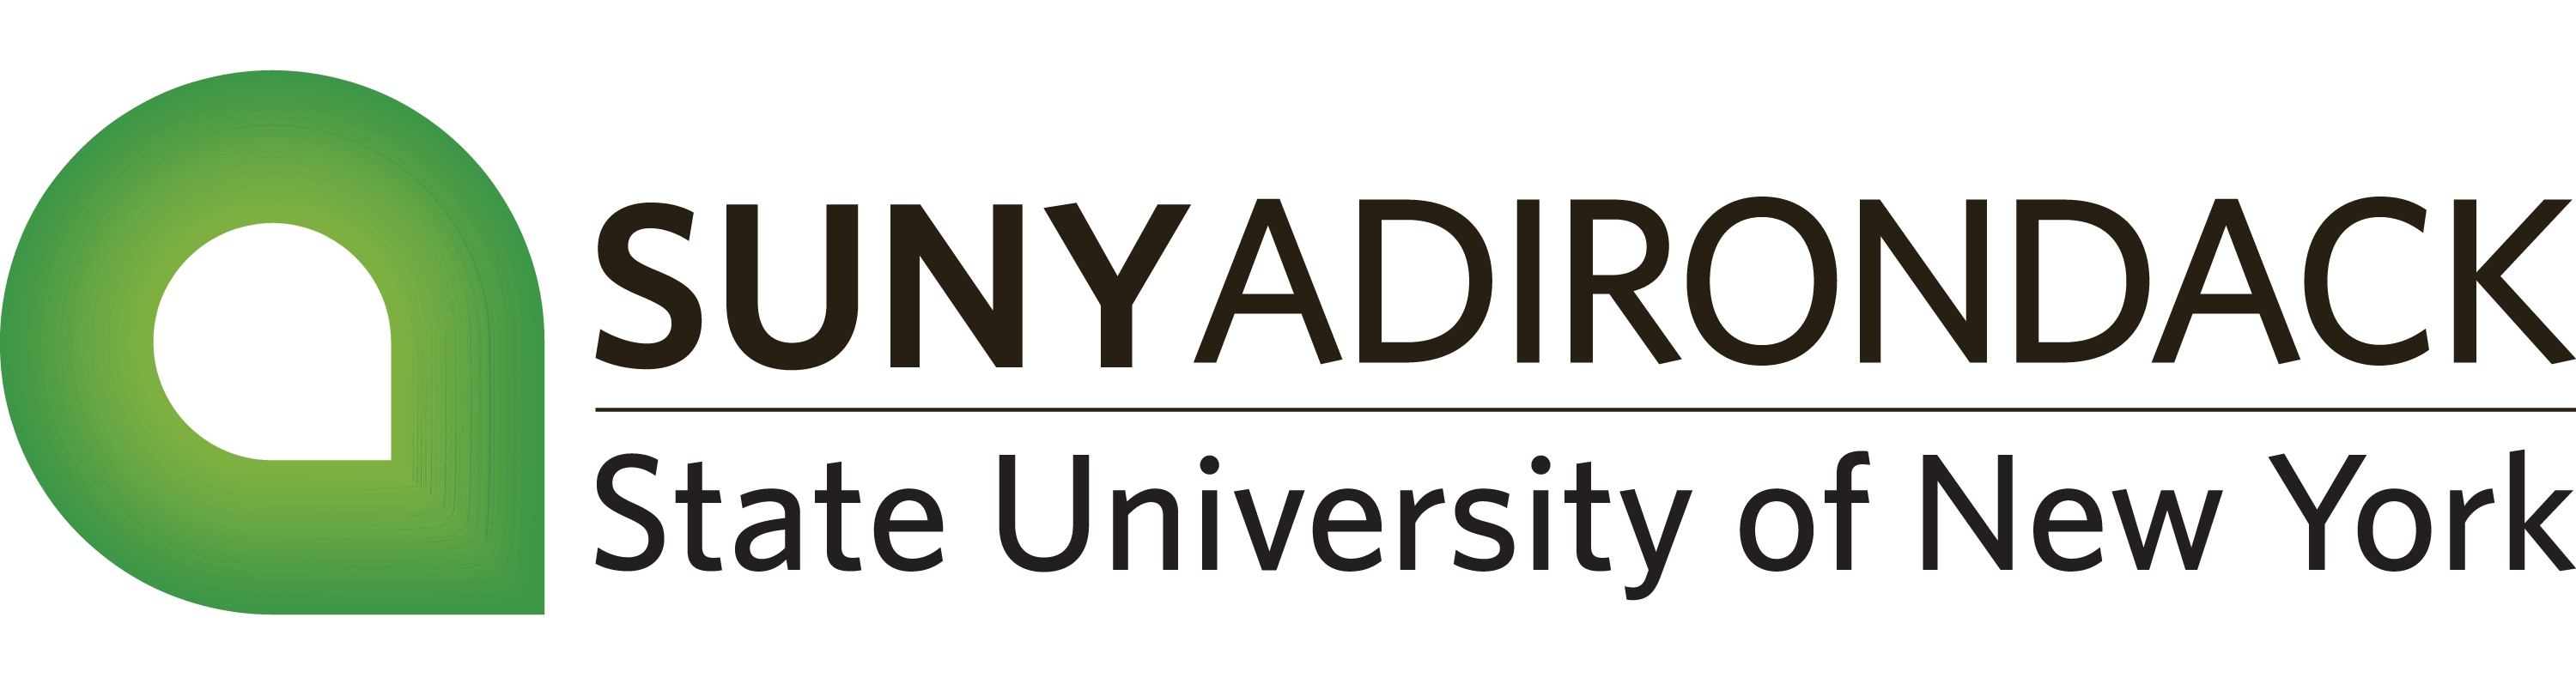 SUNY-logo